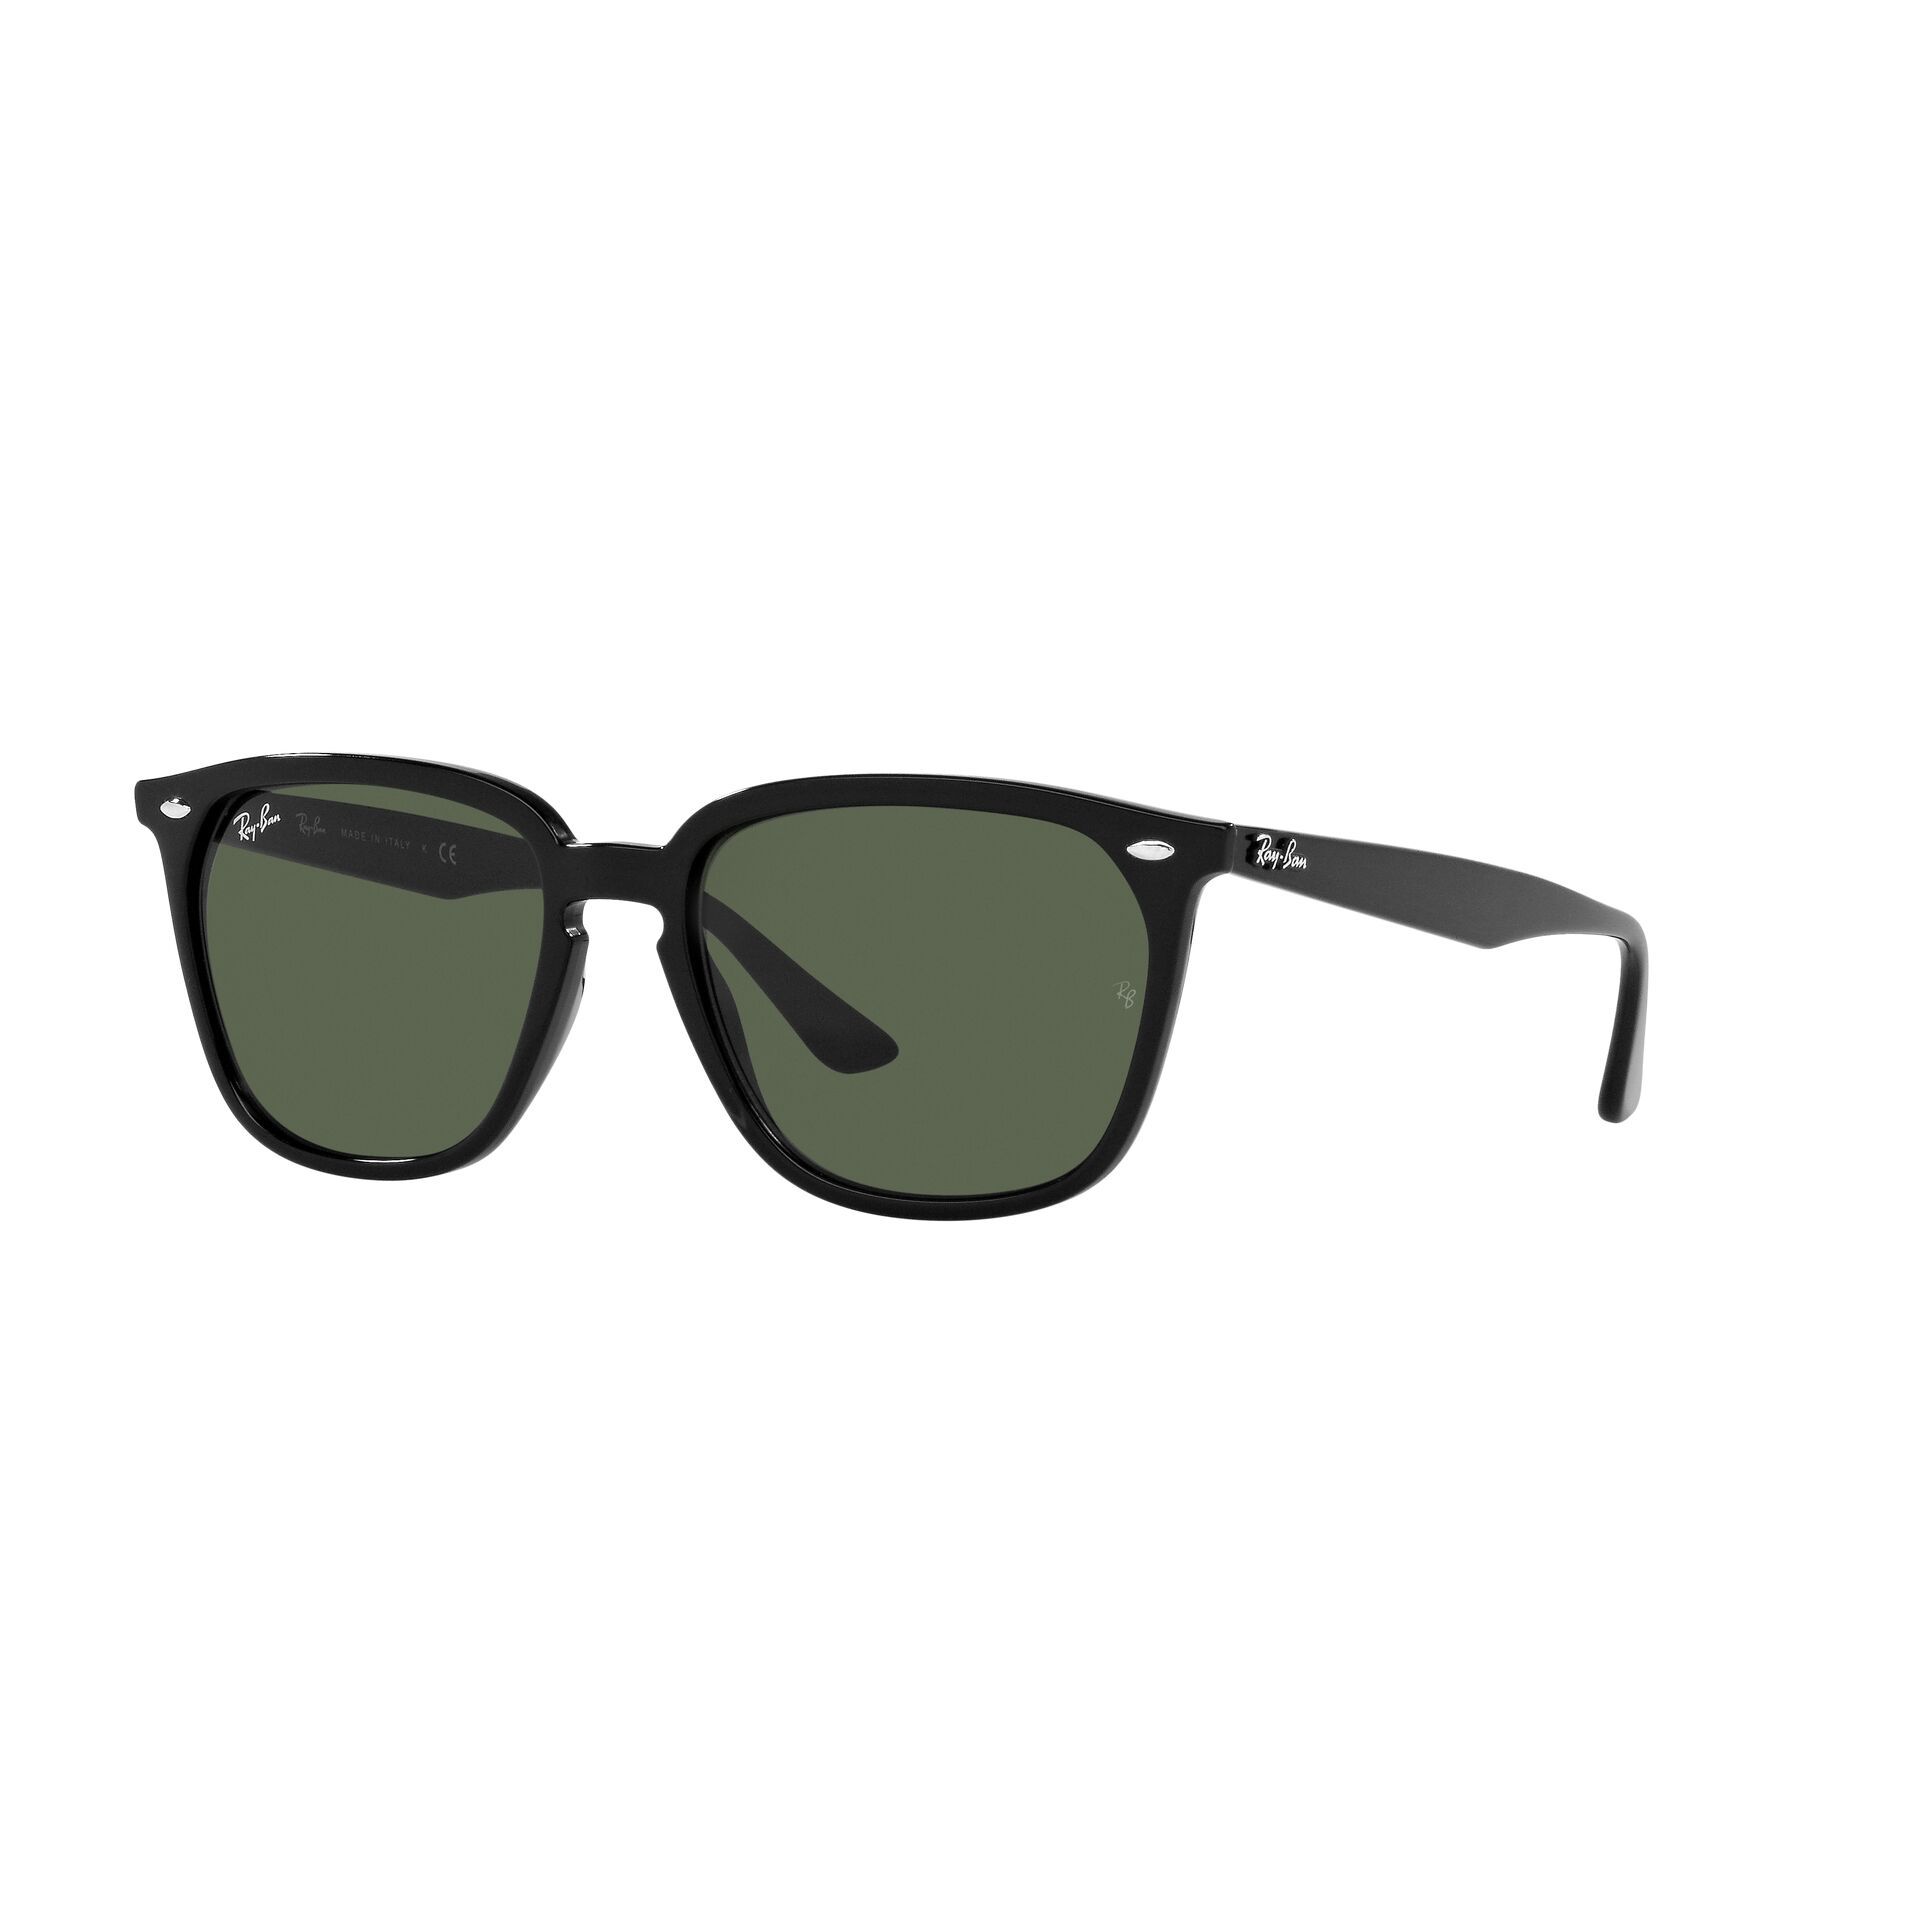 RB4362 Square Sunglasses 601 71 - size 55